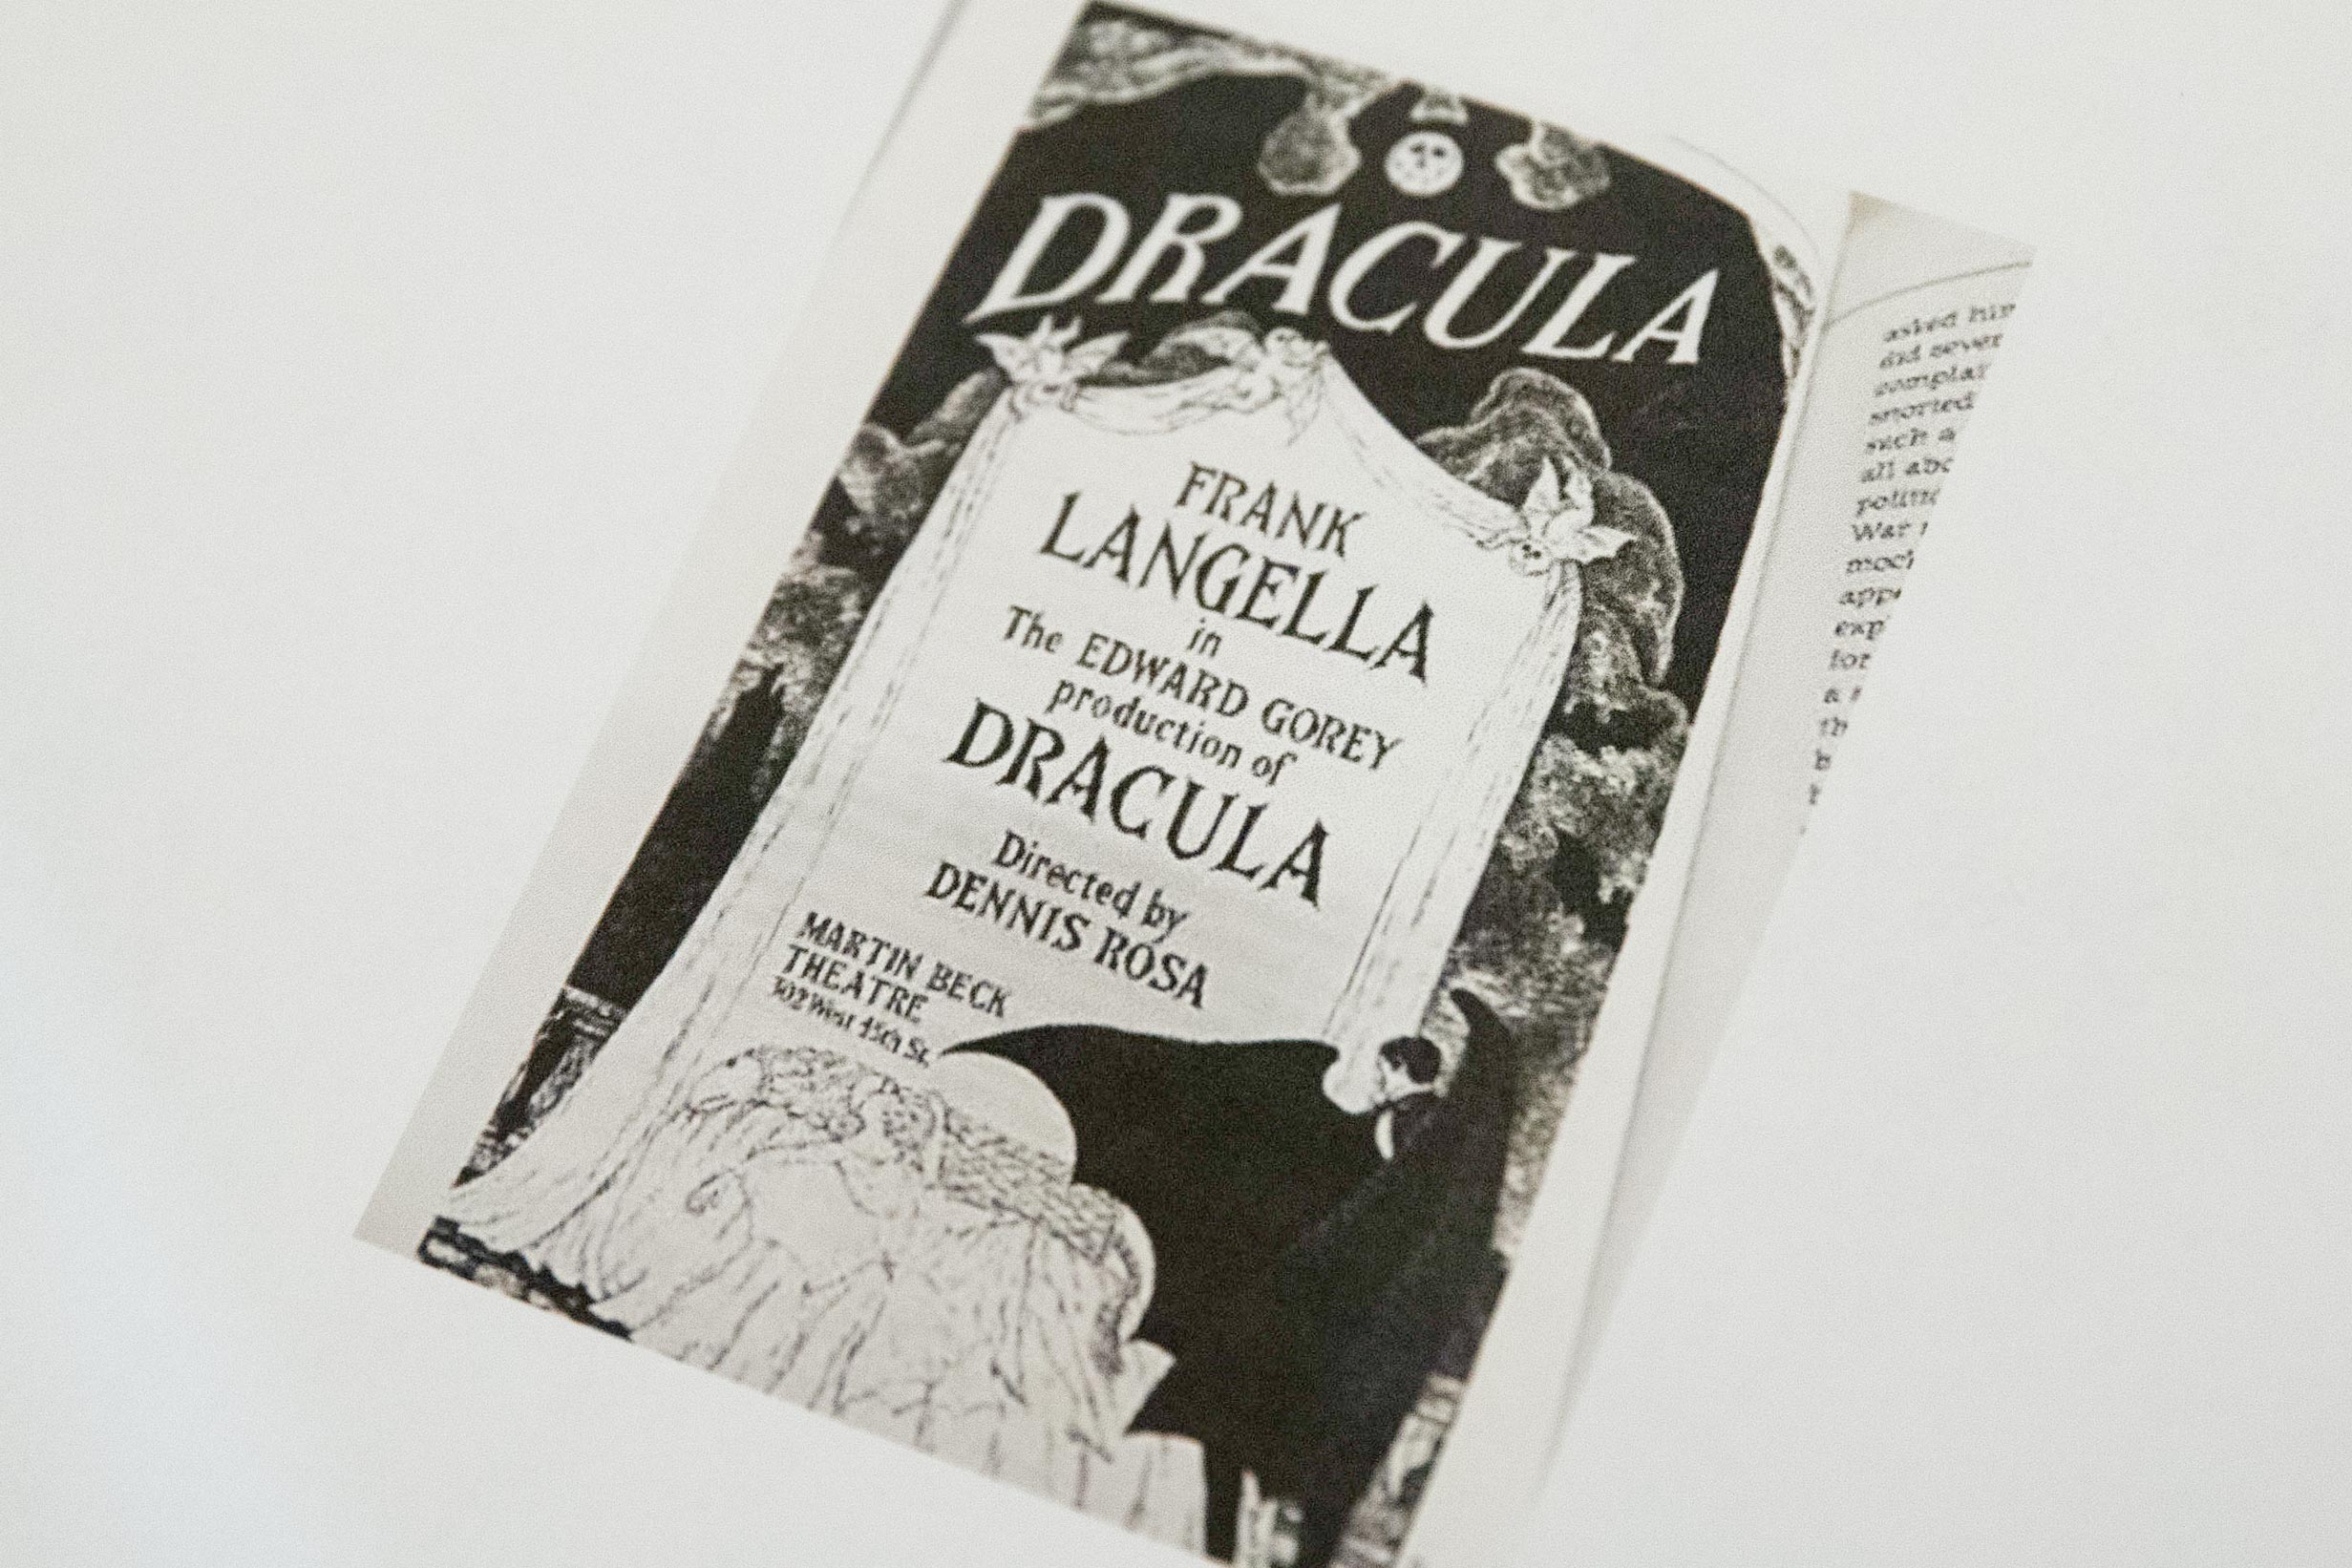 playbill of Dracula with Frank Langella